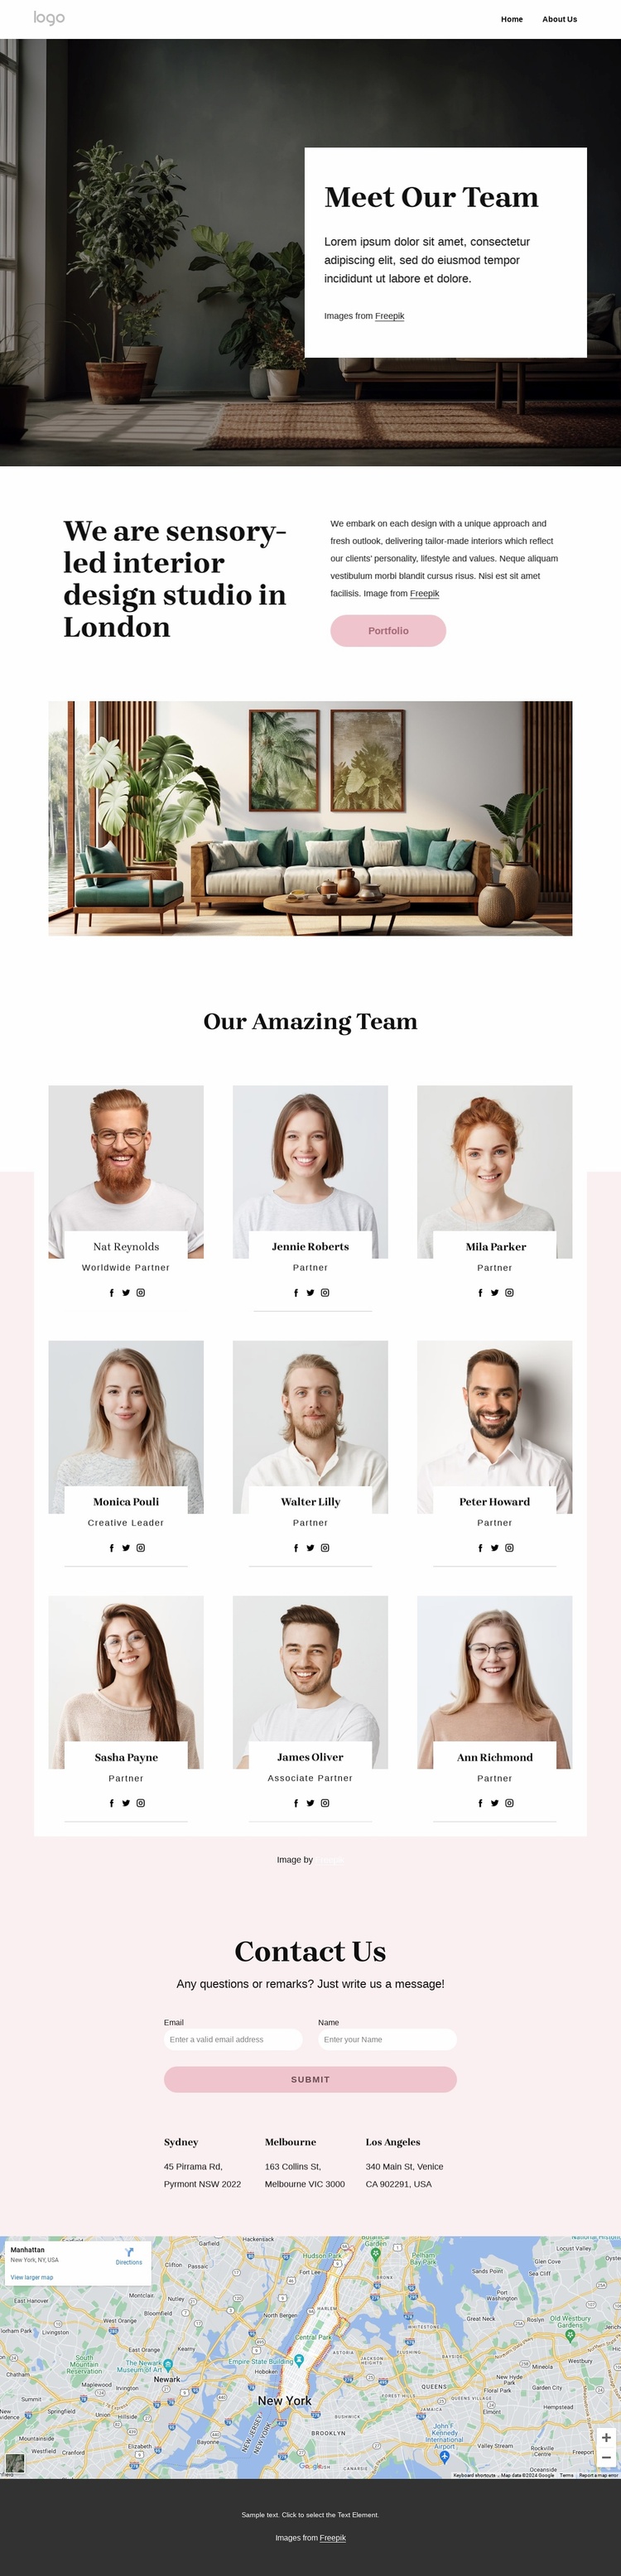 Meet interior studio team Website Template